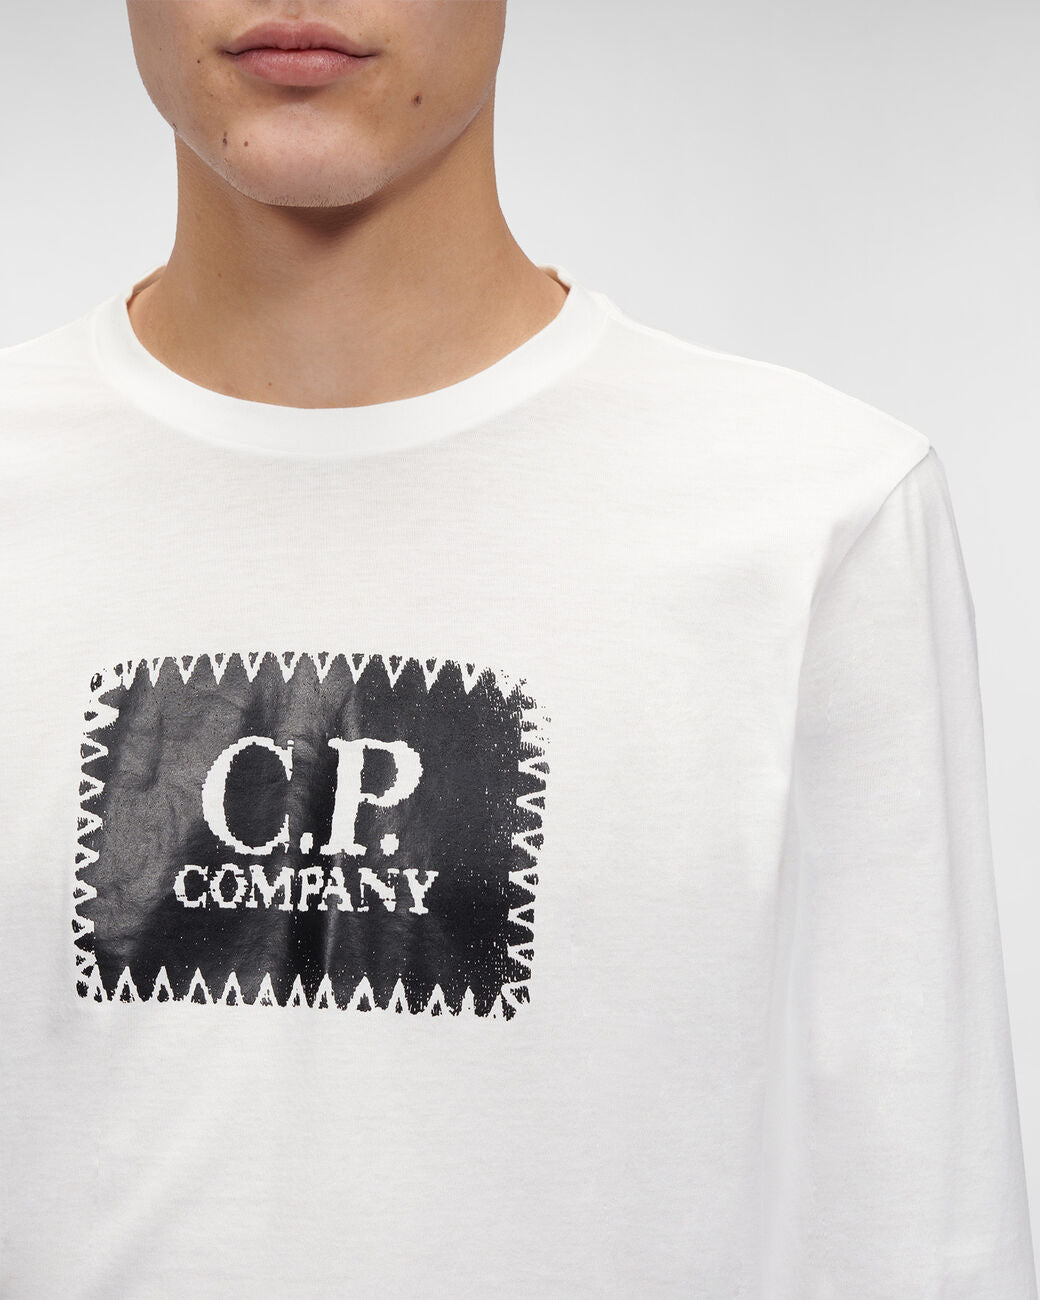 C.P Company 30/1 Label T-Shirt